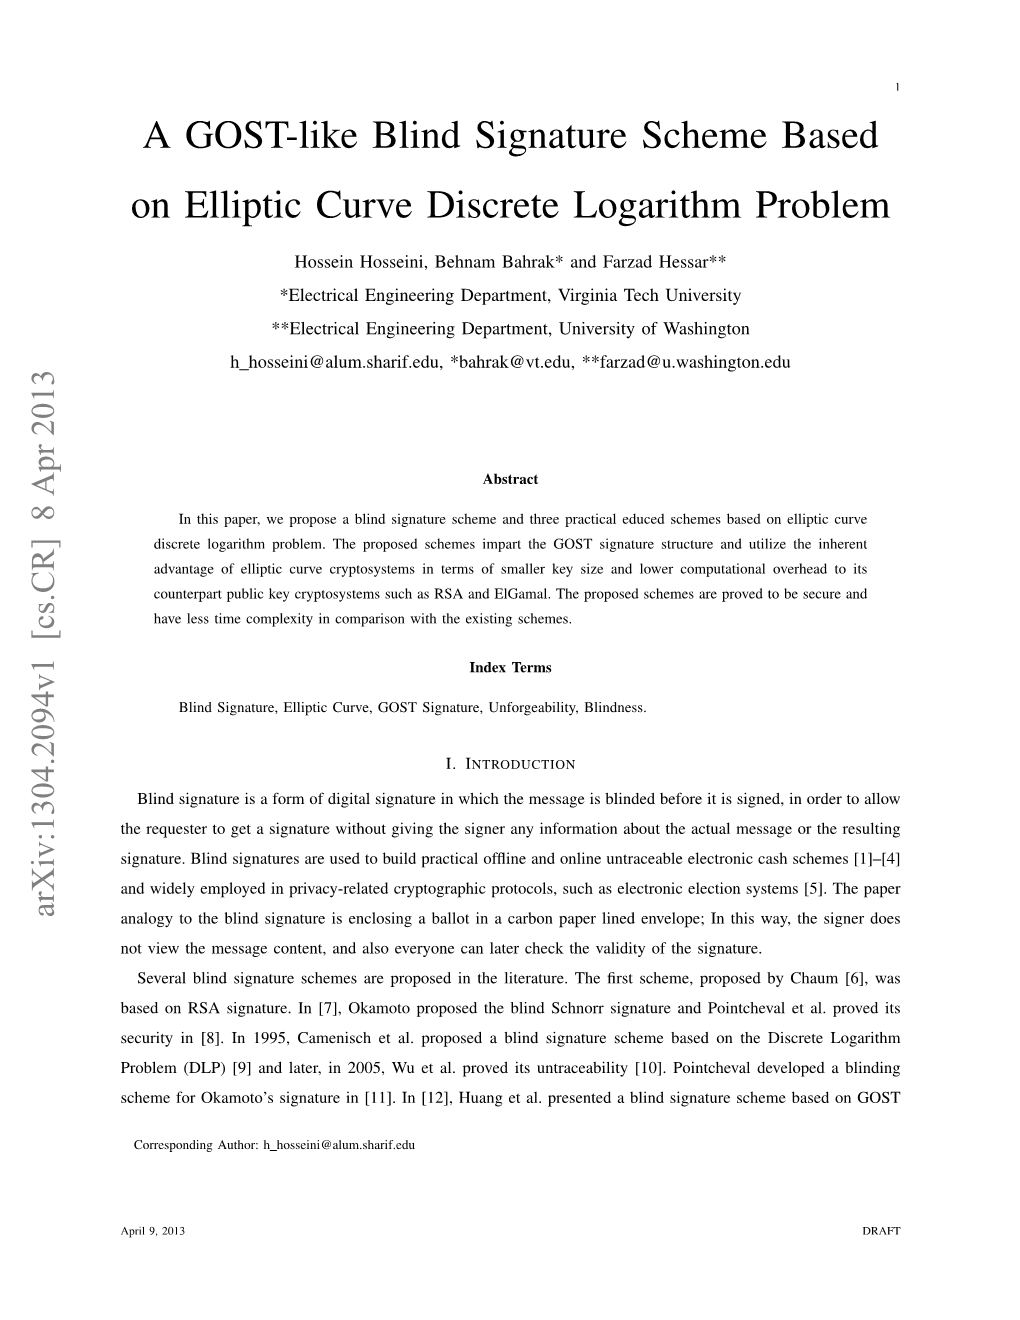 A GOST-Like Blind Signature Scheme Based on Elliptic Curve Discrete Logarithm Problem